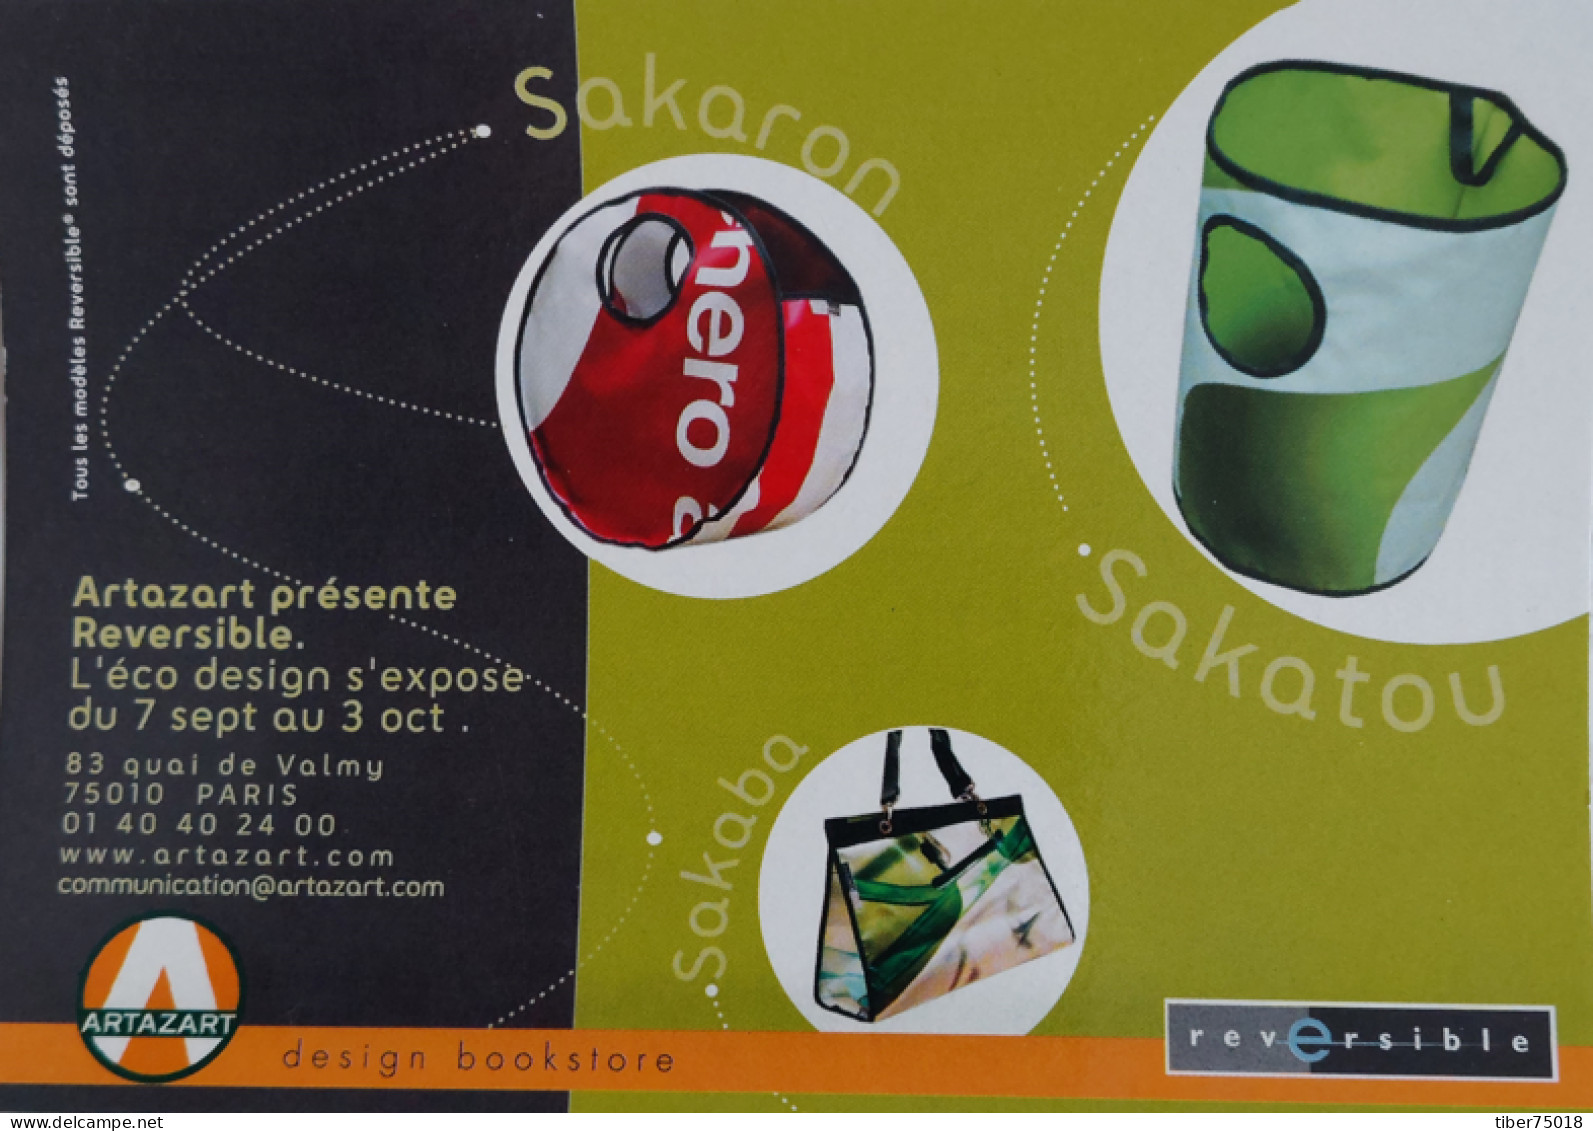 Carte Postale Cart'Com (2006) Artazart Présente Reversible (Sakatou) L'éco Design S'expose - Articles Of Virtu